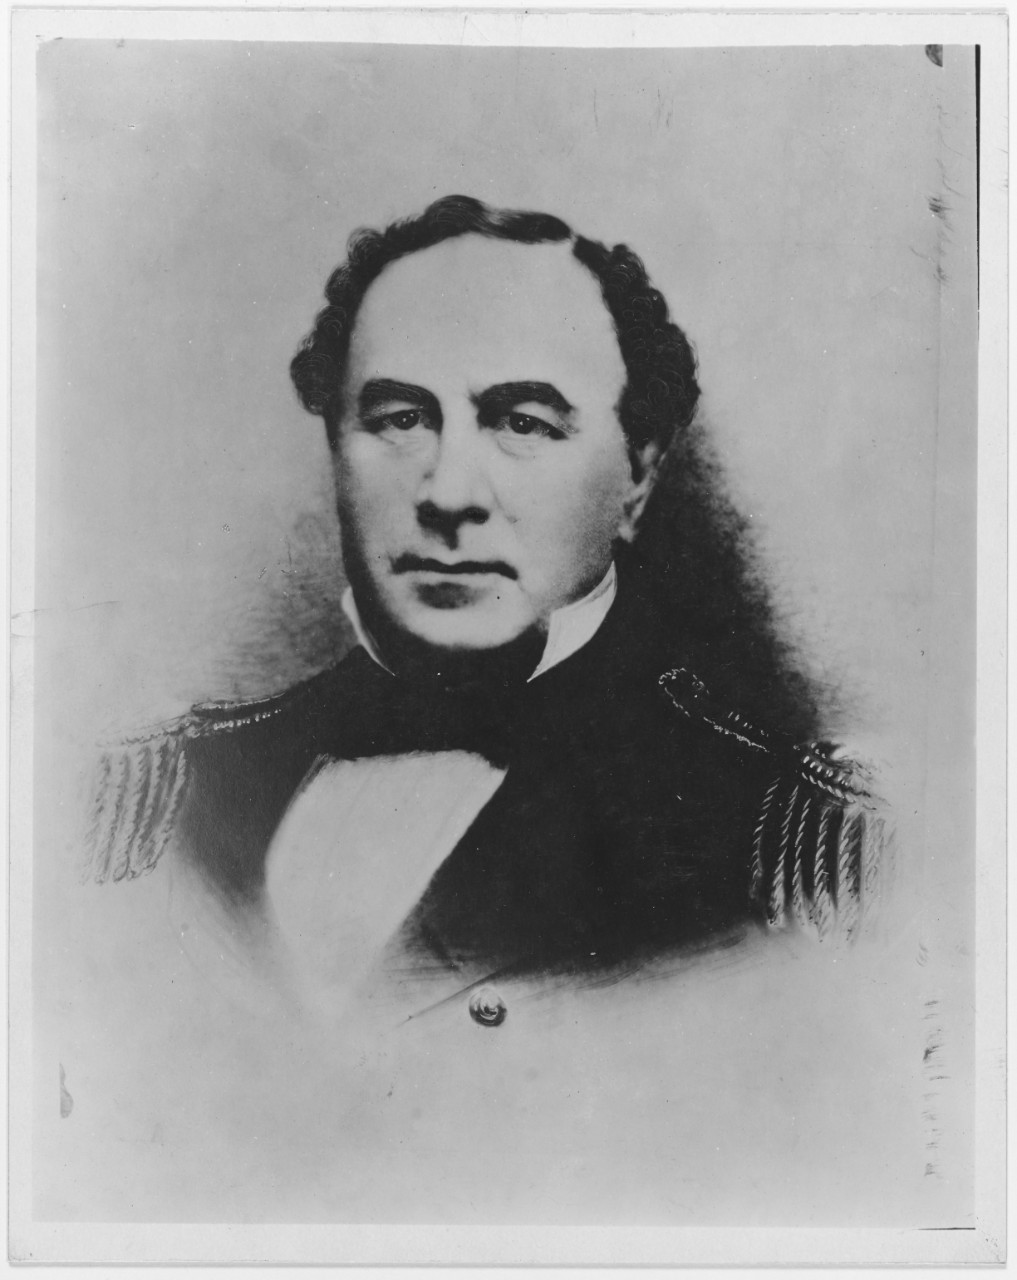 Commodore J.B. Merchand, USN